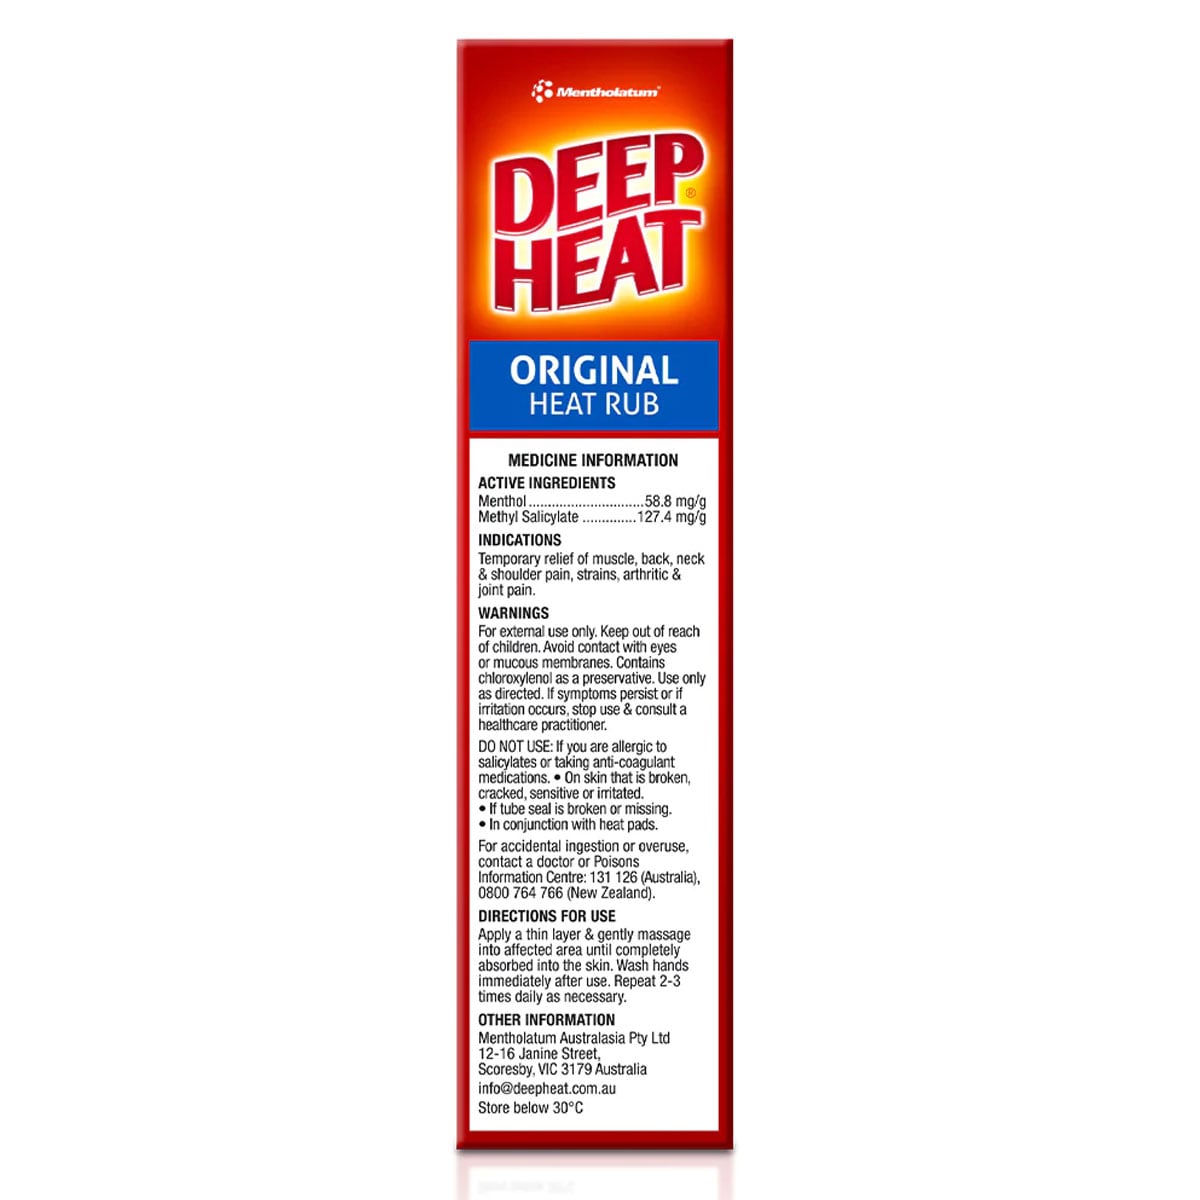 Deep Heat Original Heat Rub Pain Relief 50g